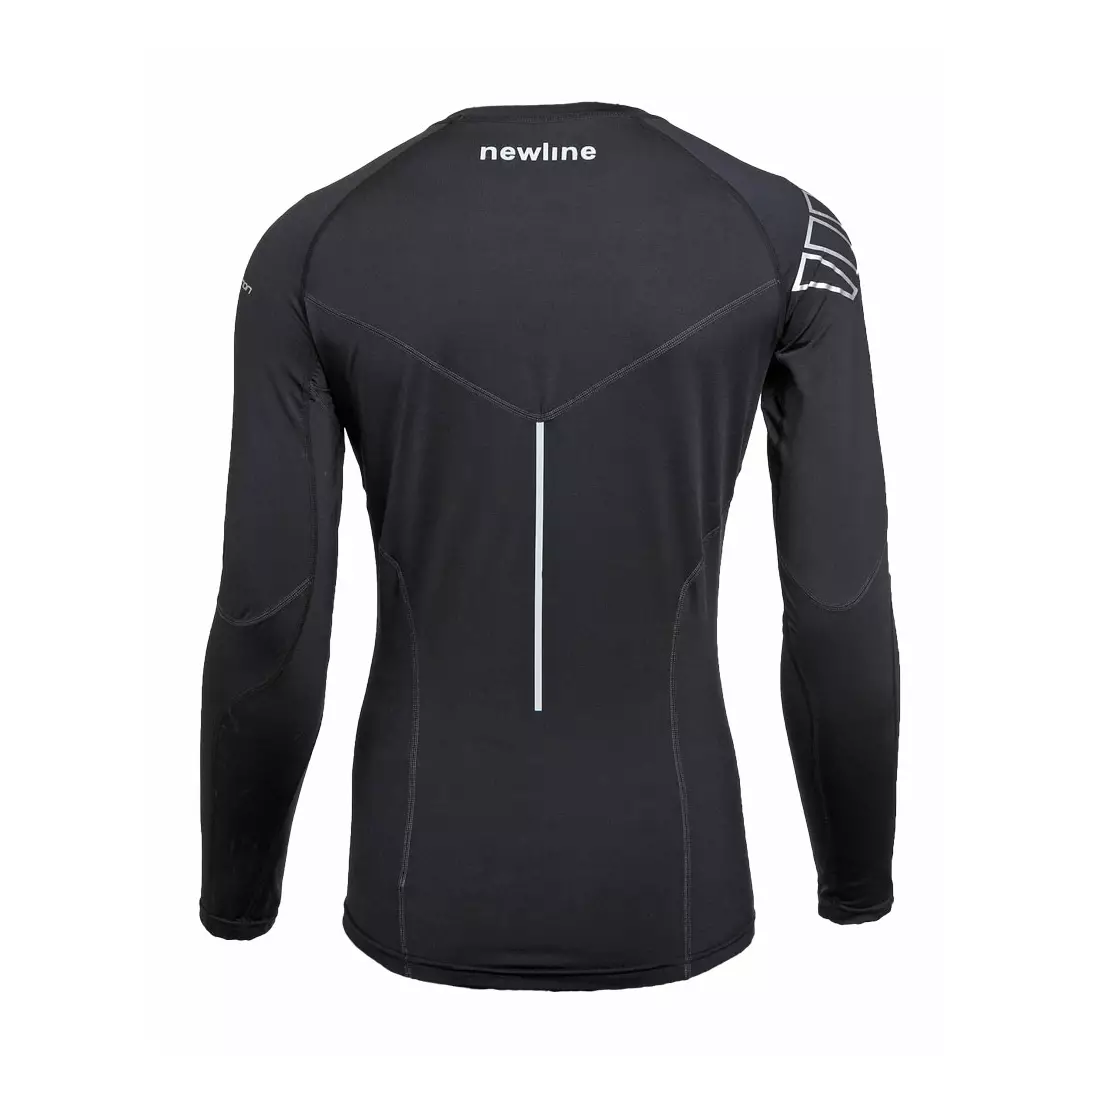 NEWLINE COMPRESSION THERMAL LS SHIRT 11165-060 - men's compression shirt, color: Black